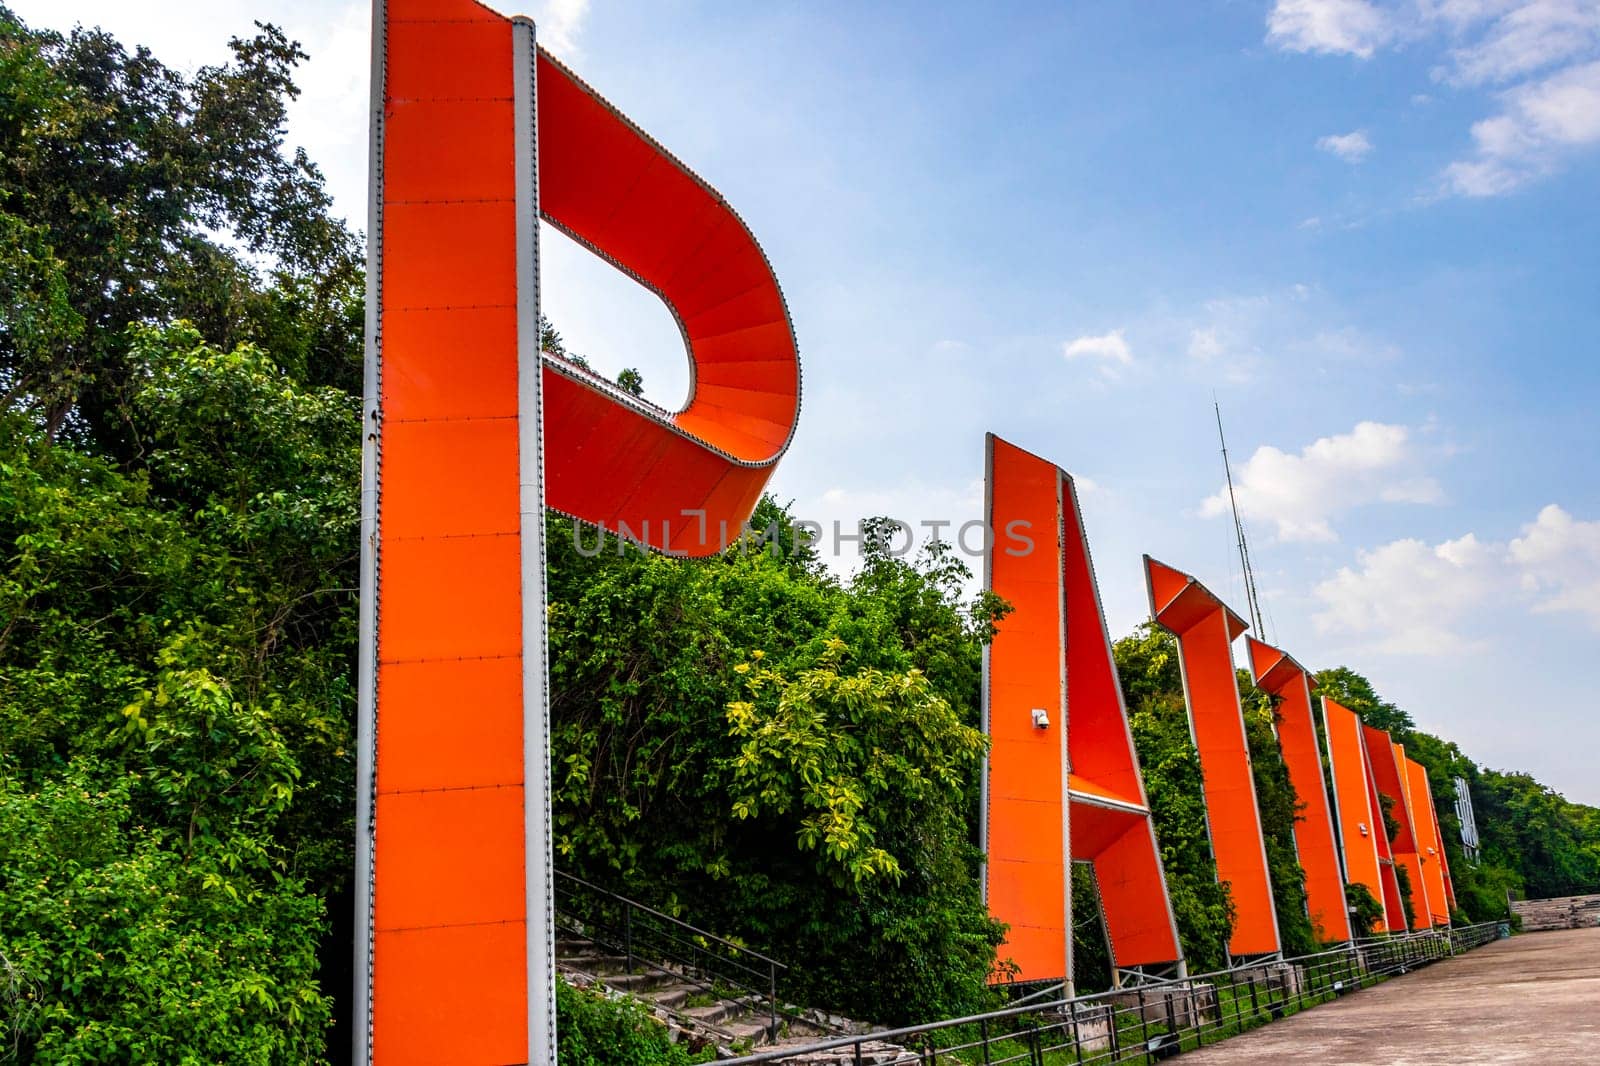 Pattaya Chon Buri Thailand 27. October 2018 Pattaya City name sign letterig letters on hill in Pattaya Bang Lamung Amphoe Chon Buri Thailand in Southeastasia Asia.